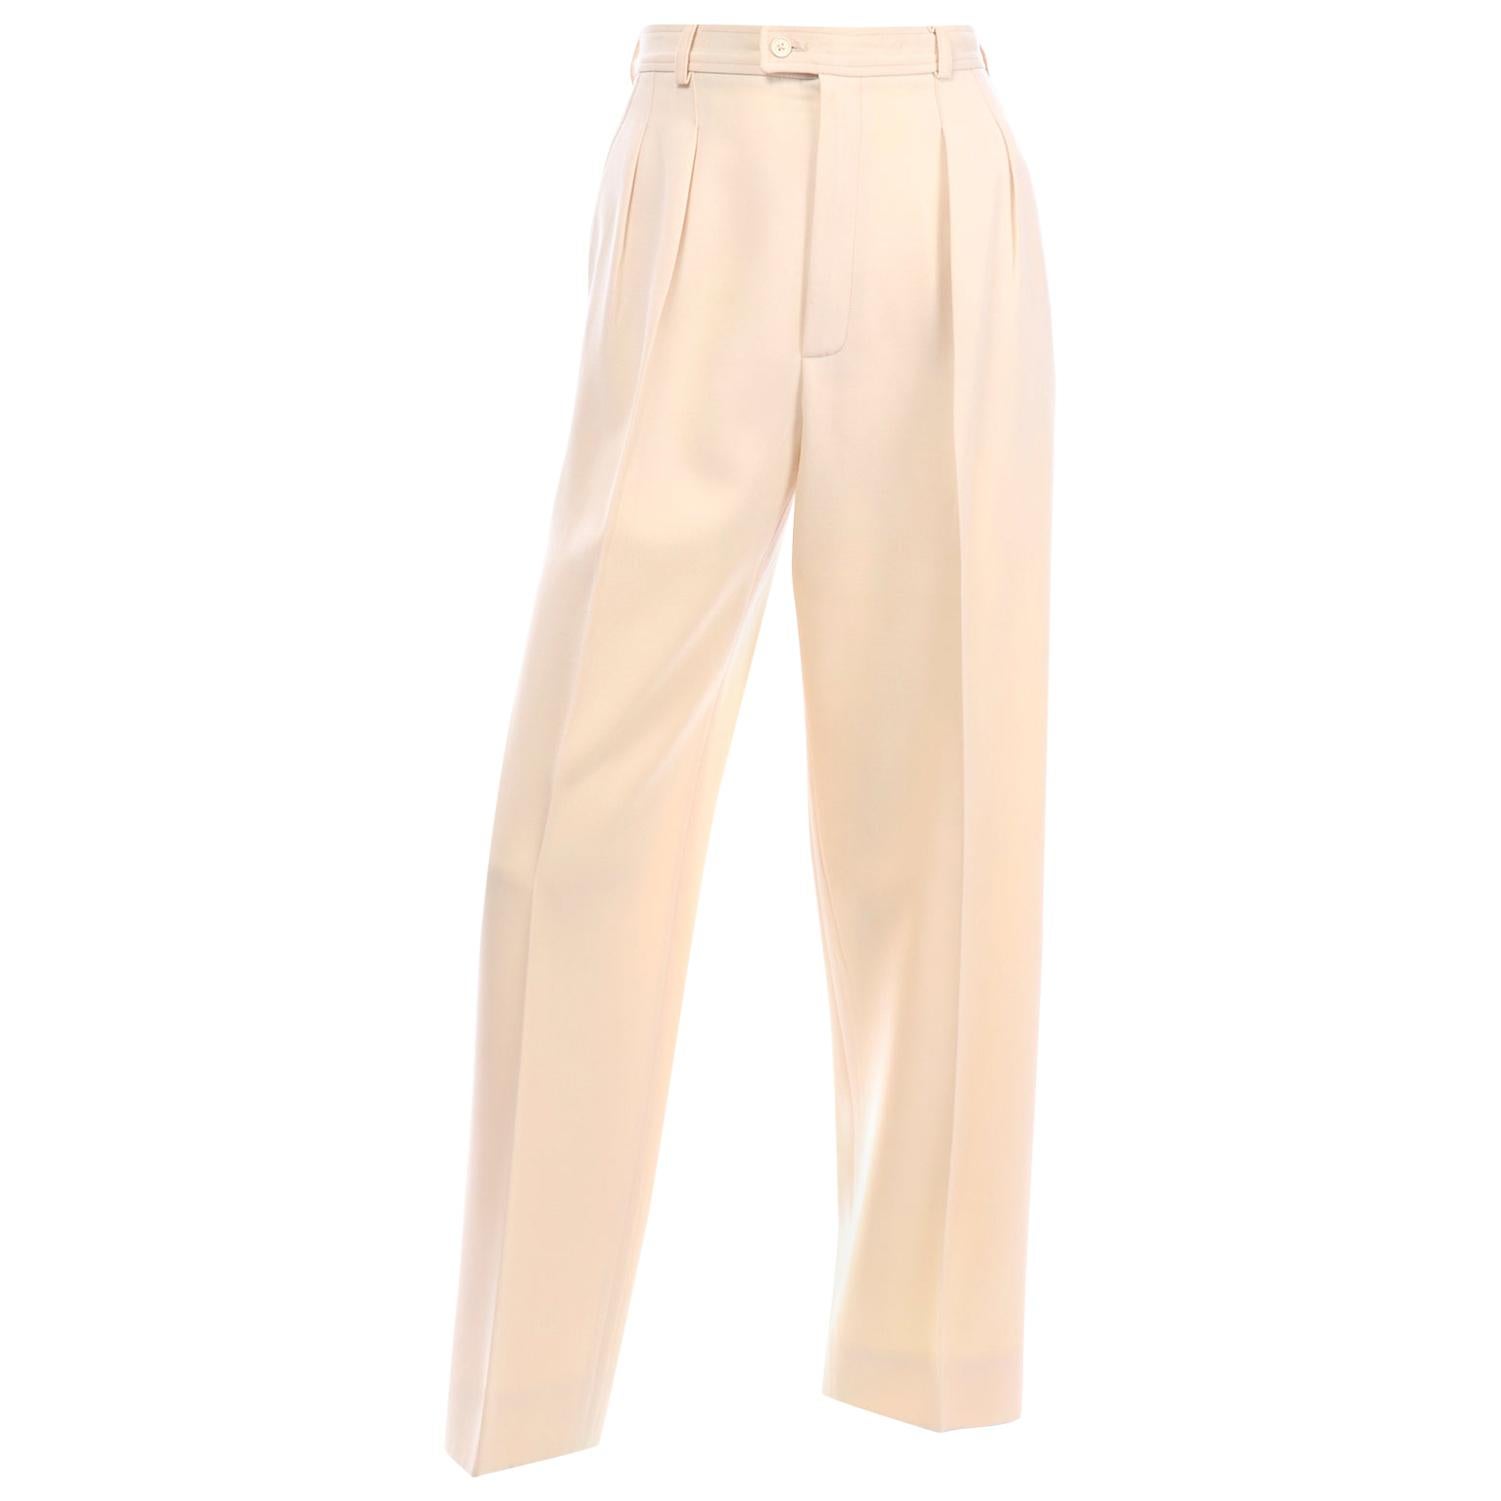 Yves Saint Laurent Pants Vintage High Waisted Cream Trousers